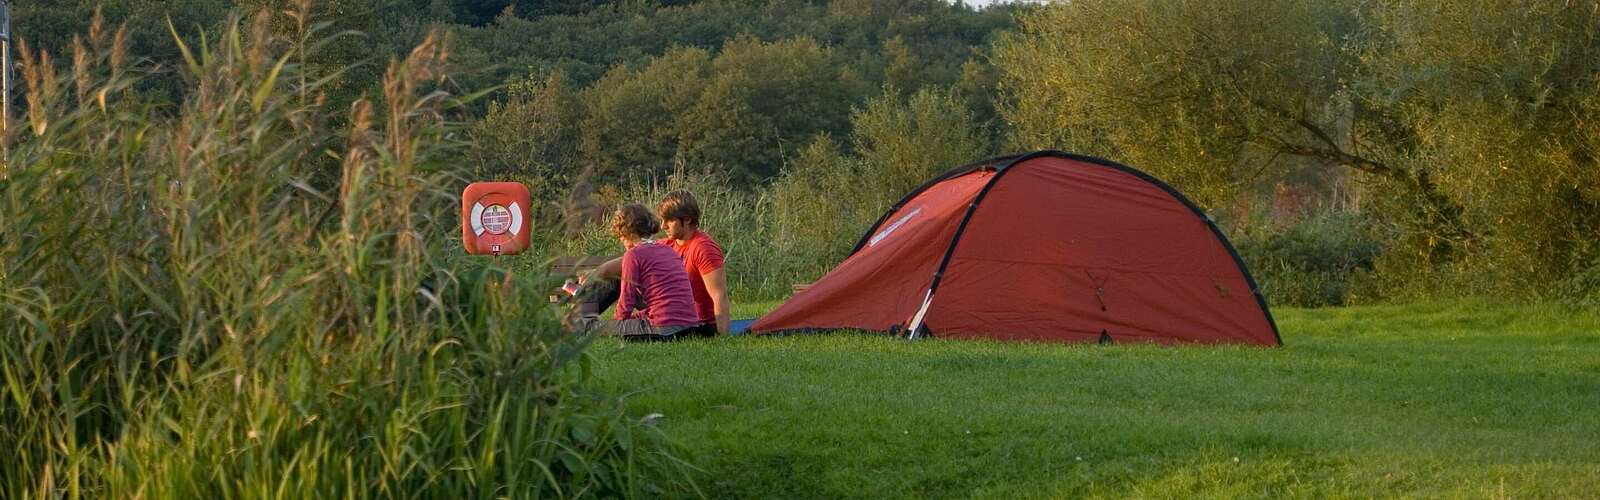 Campingzelt in der Natur,
        
    

        Foto: TMB-Fotoarchiv/Wolfgang Ehn